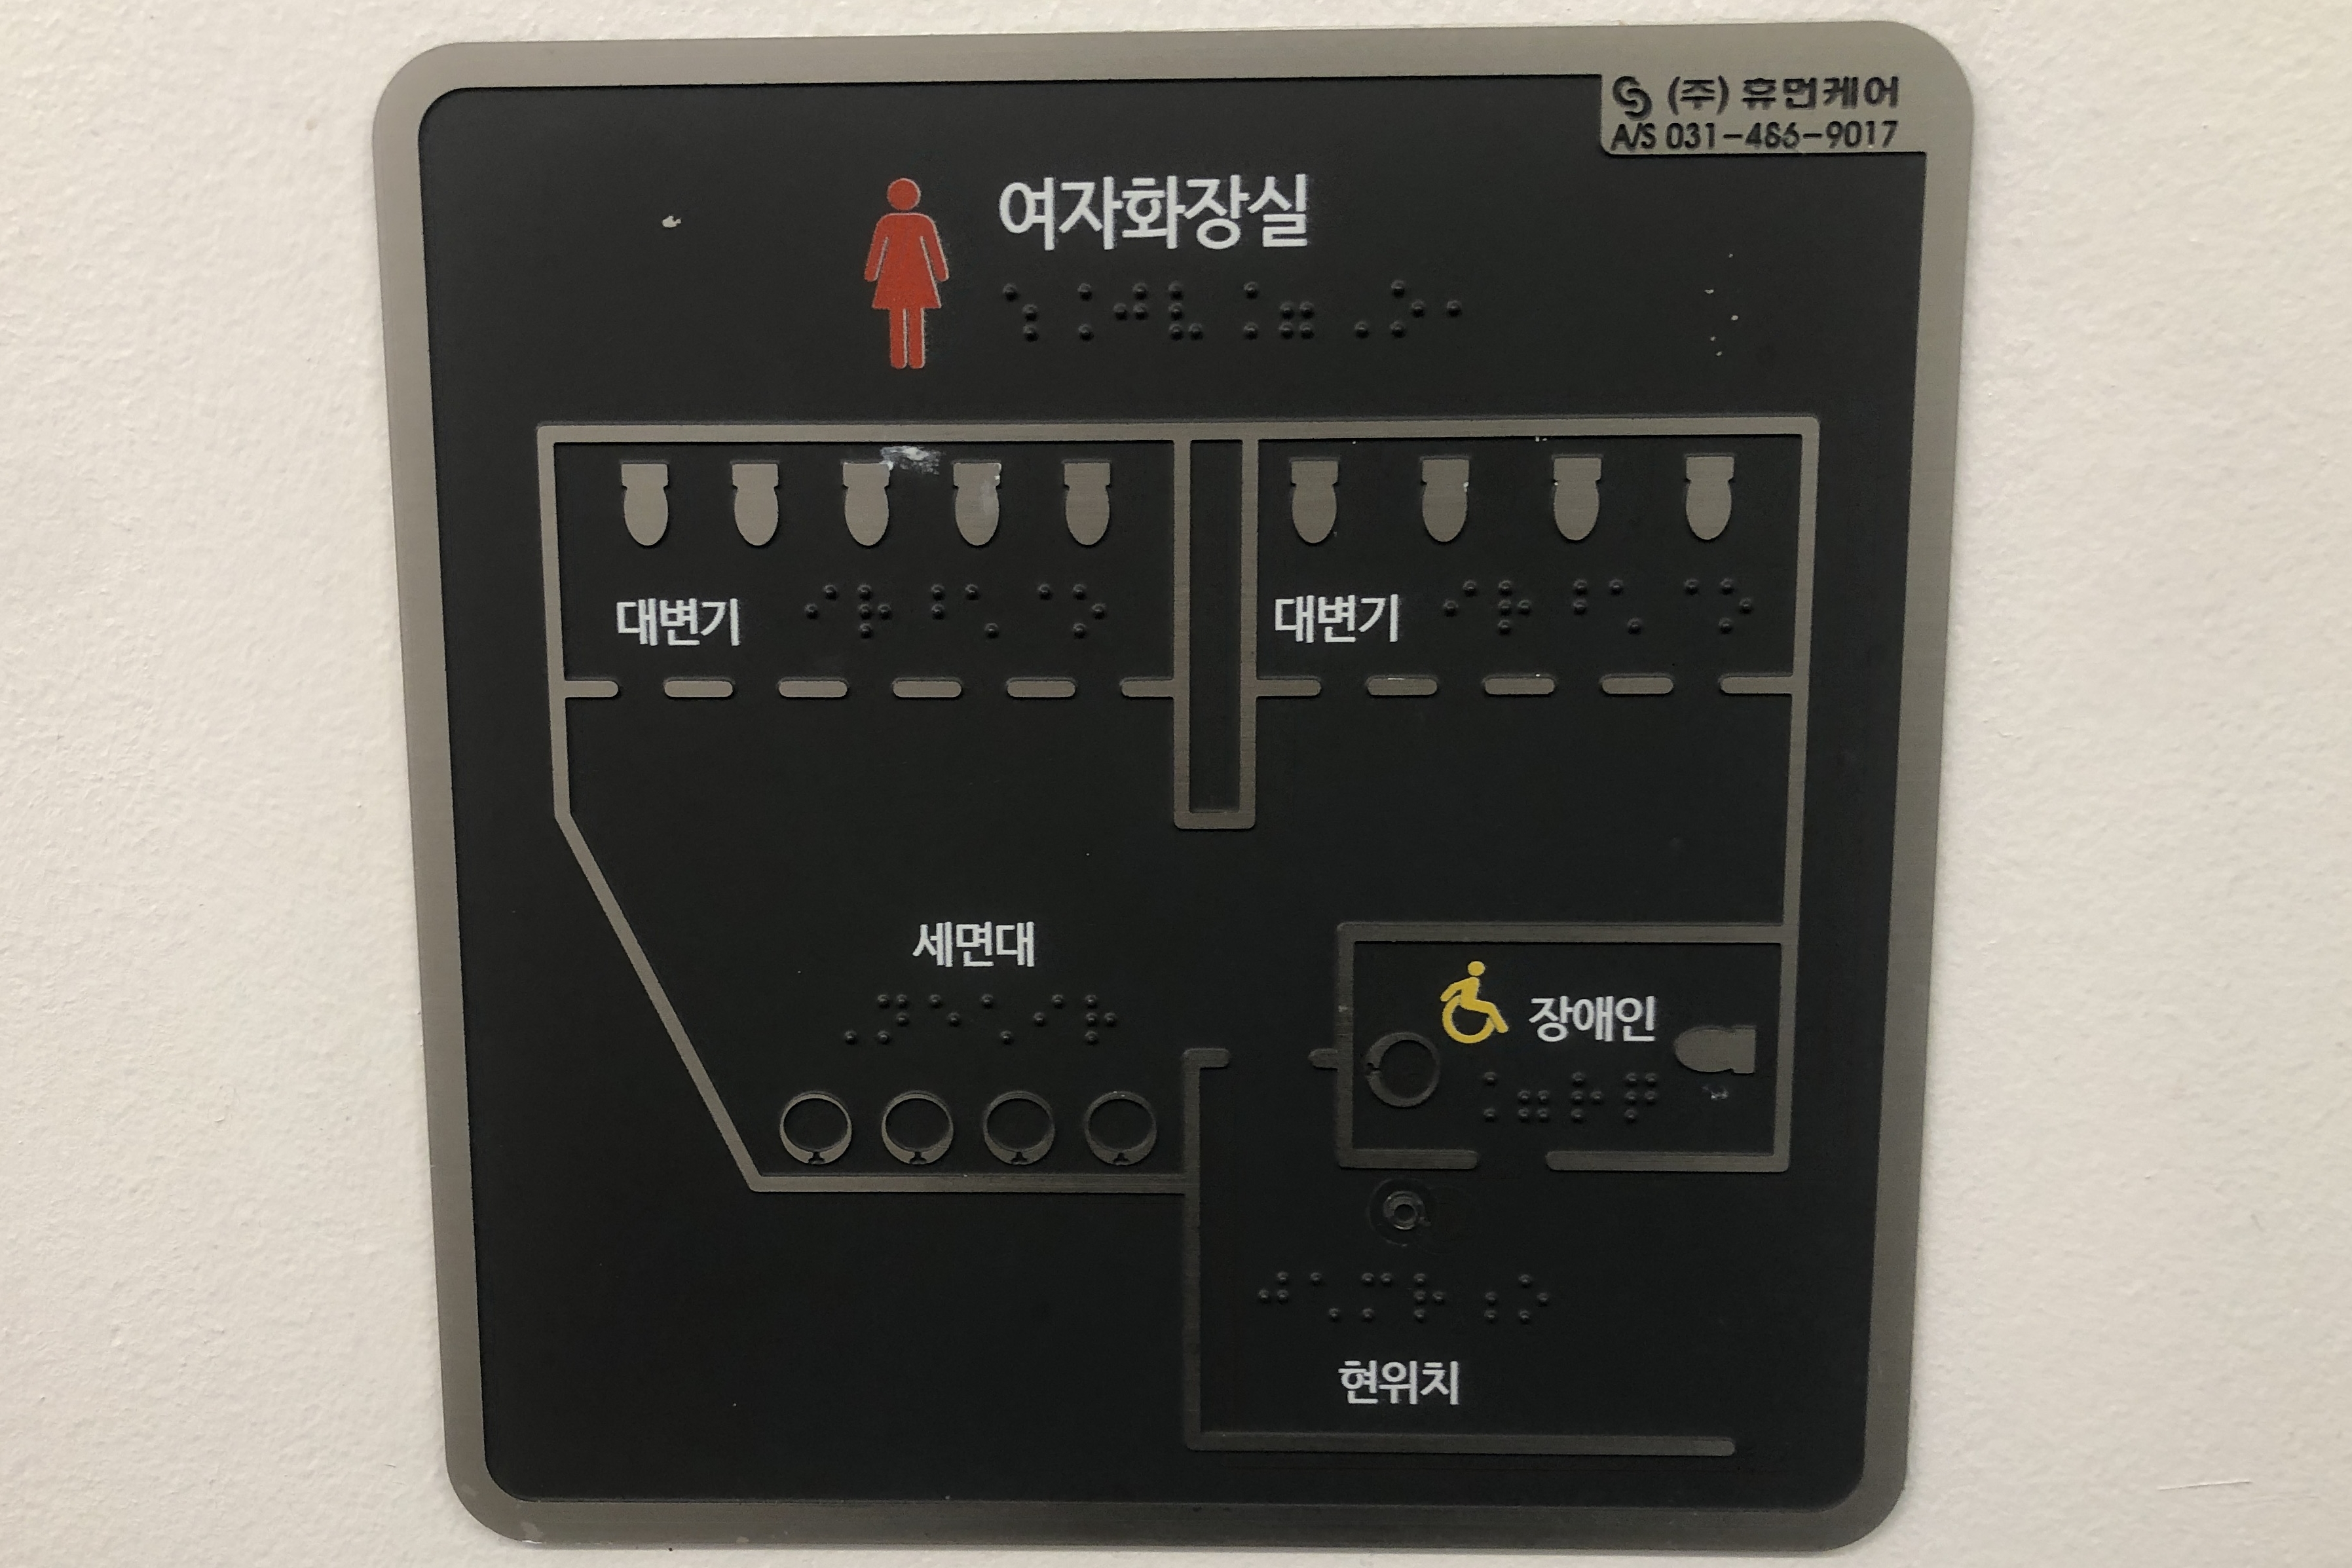 Restroom0 : Location of restrooms at Dongdaemun Design Plaza 
